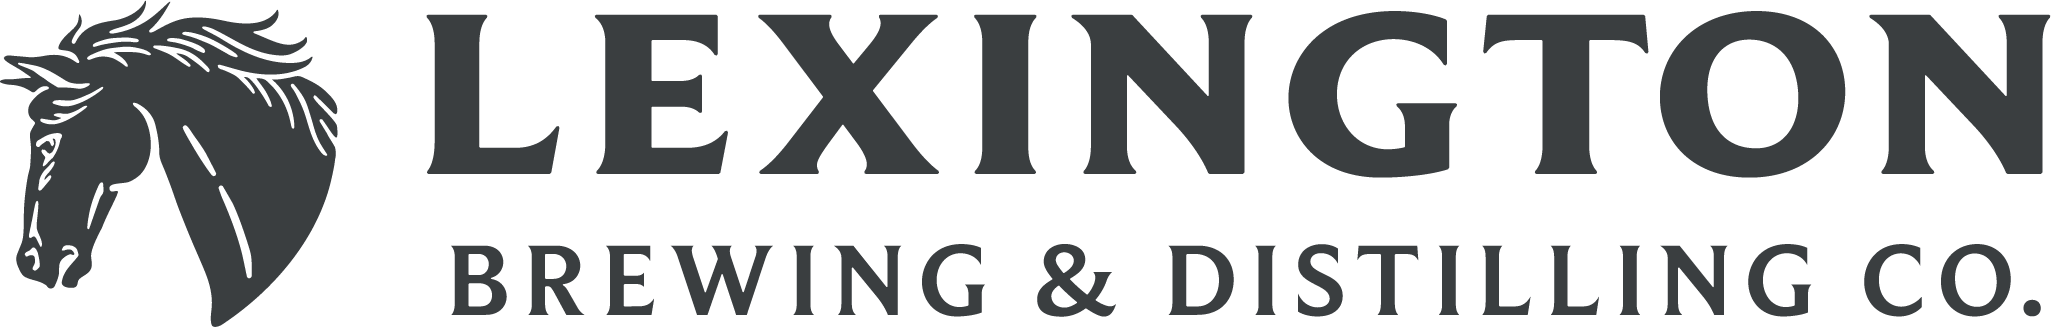 Lex Brewing Co Logo.png